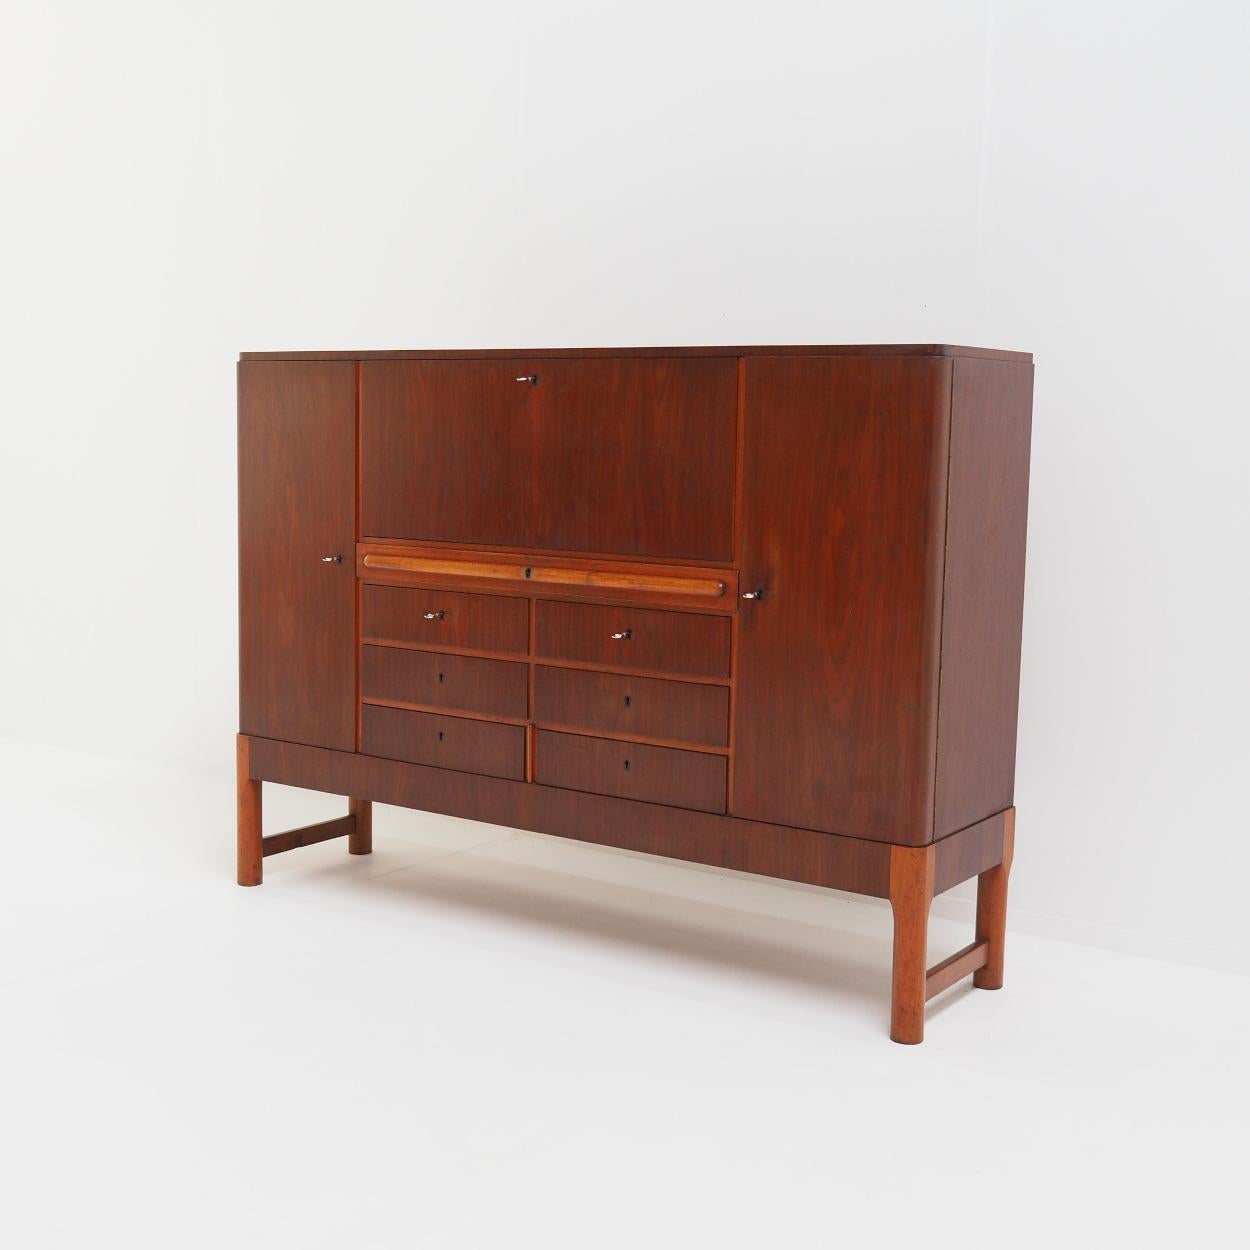 Scandinavian Modern Scandinavian High Quality Cabinet from the 1960s For Sale